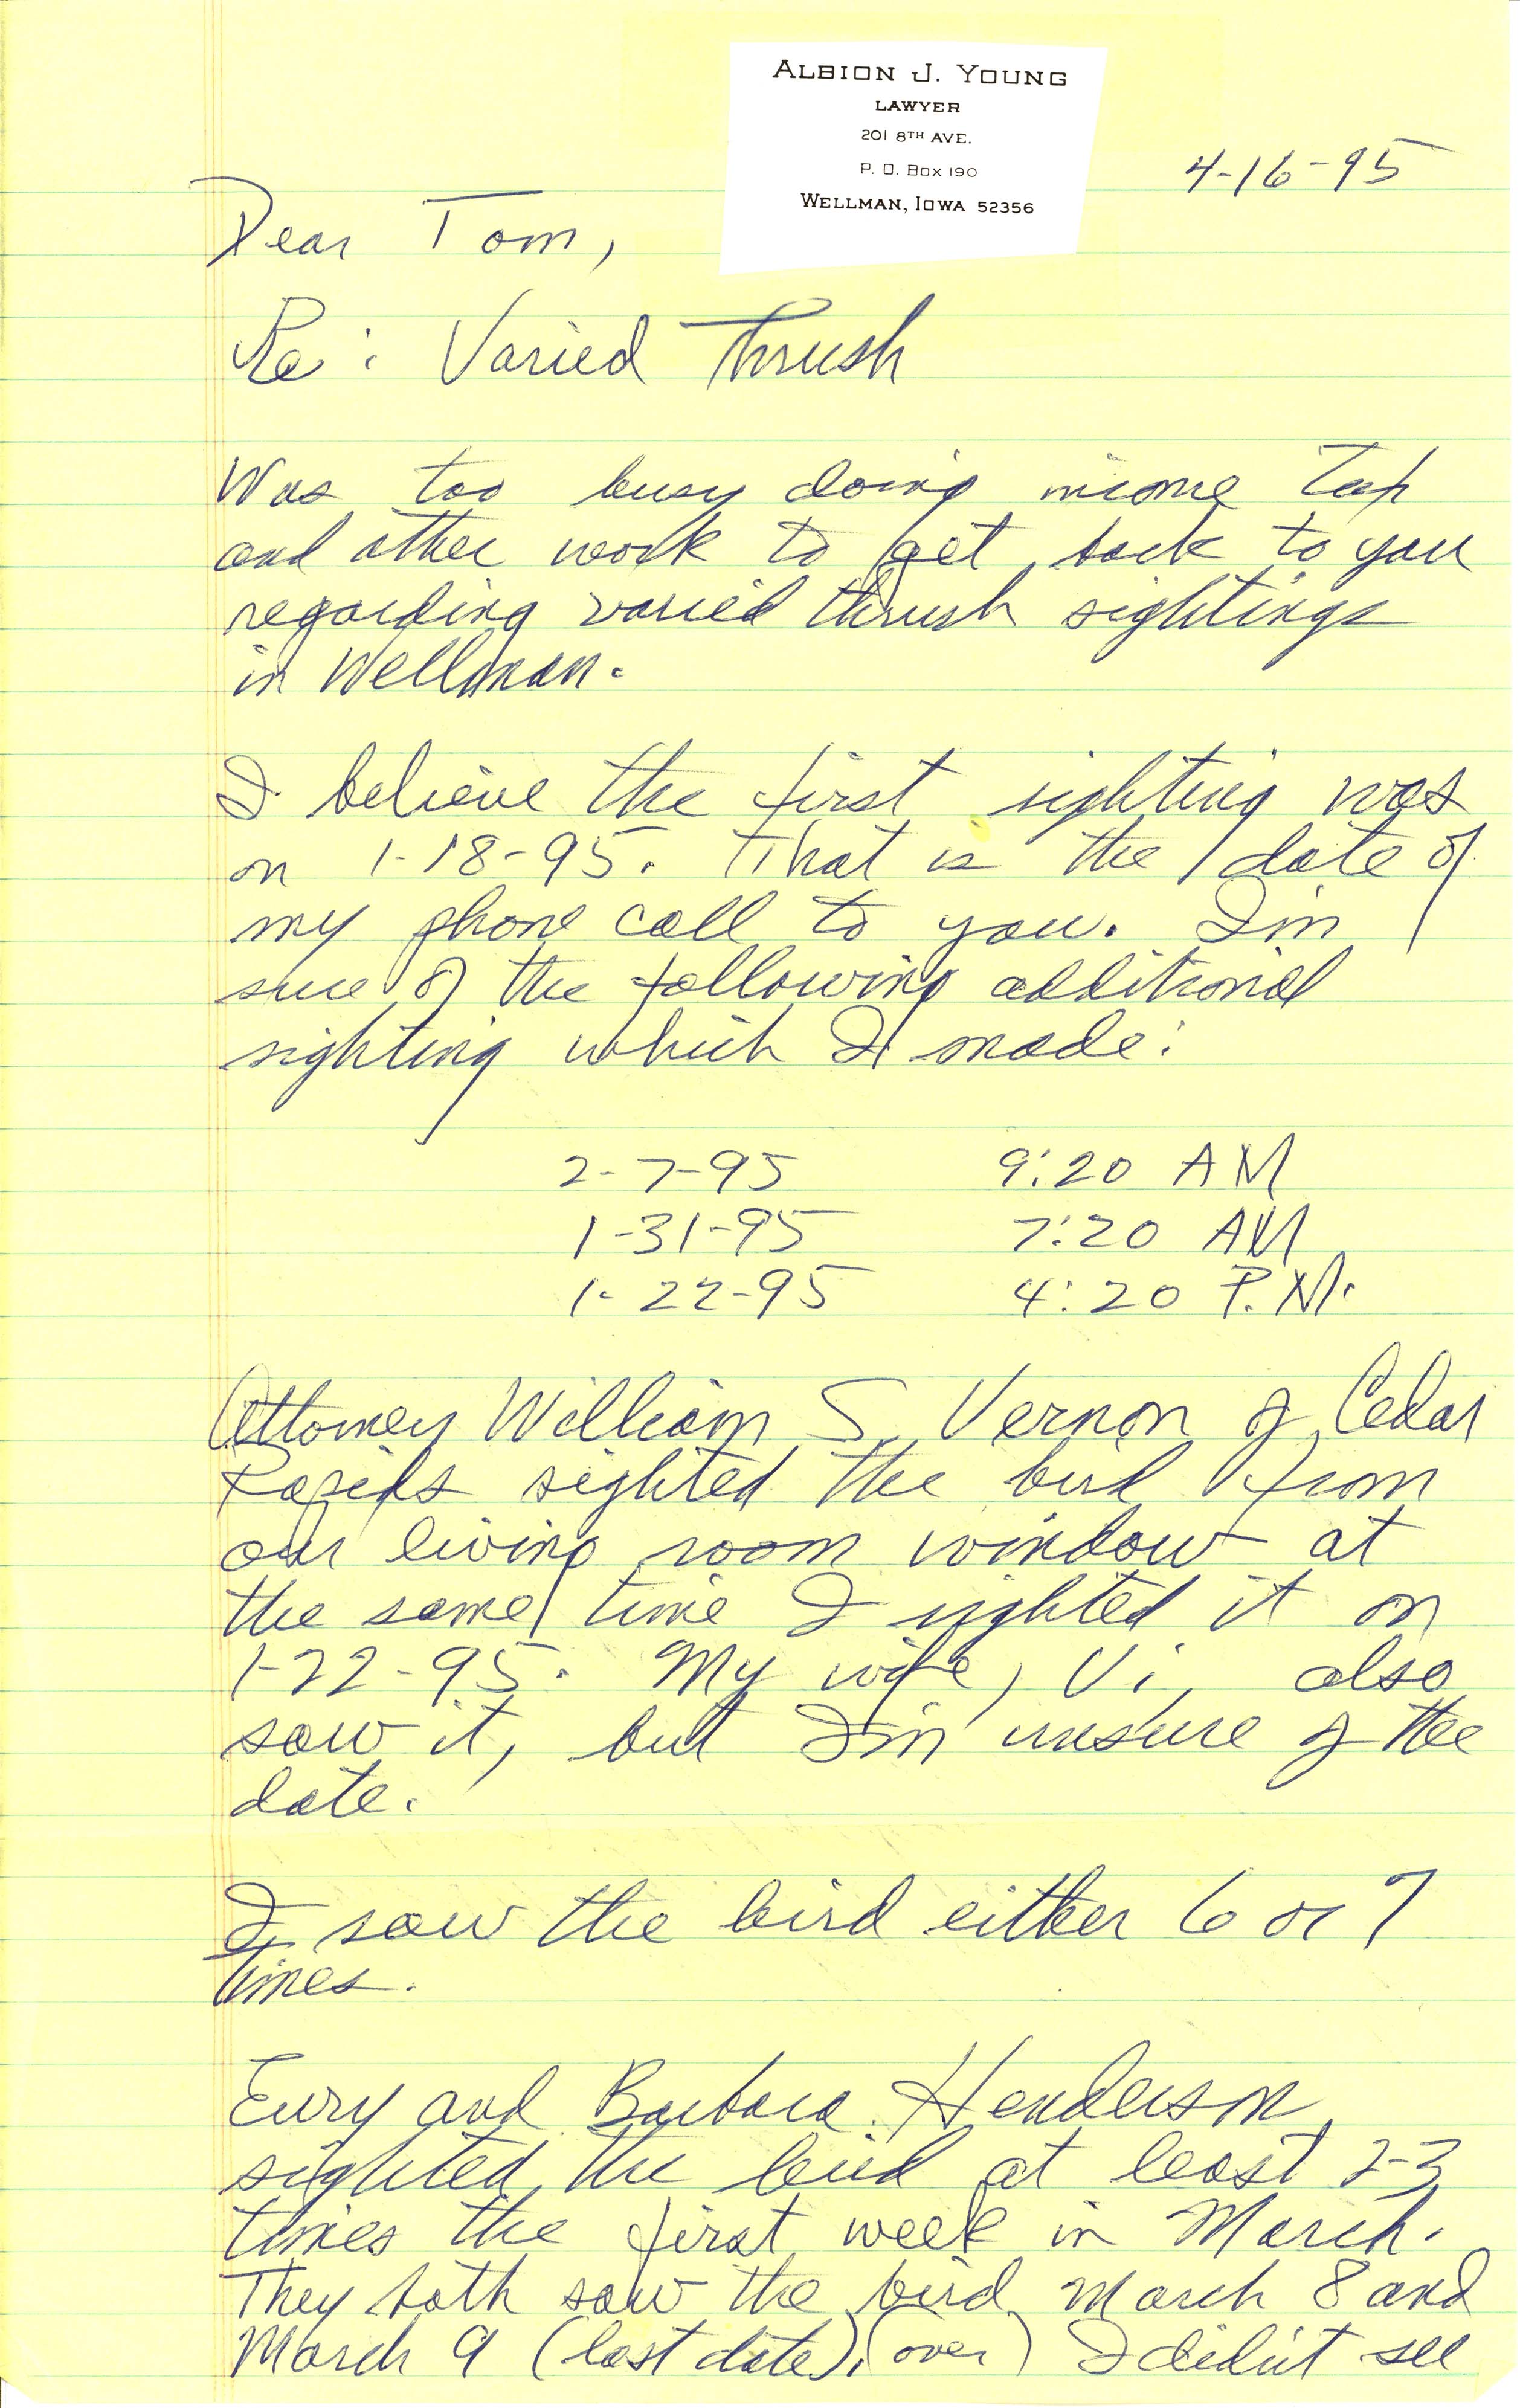 Albion Young letter to Thomas Kent regarding Varied Thrush sighting, April 16, 1995